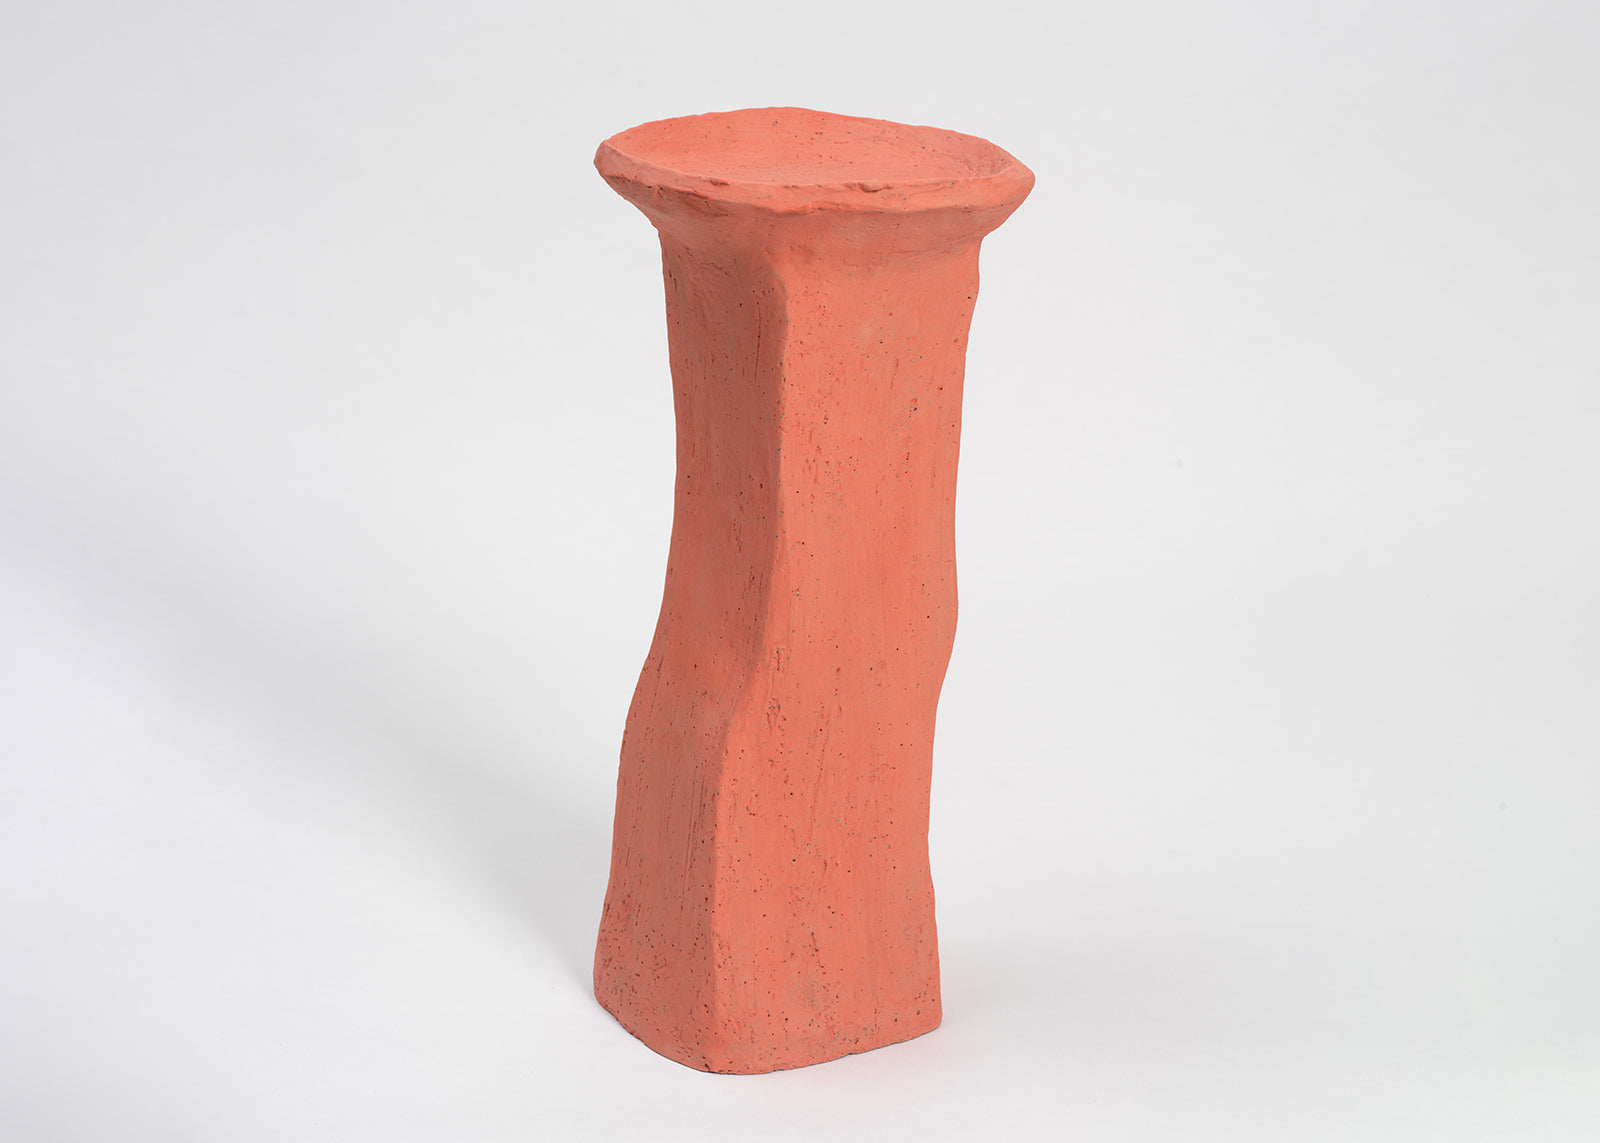 Christine Roland, ‘Orange table’, 2020